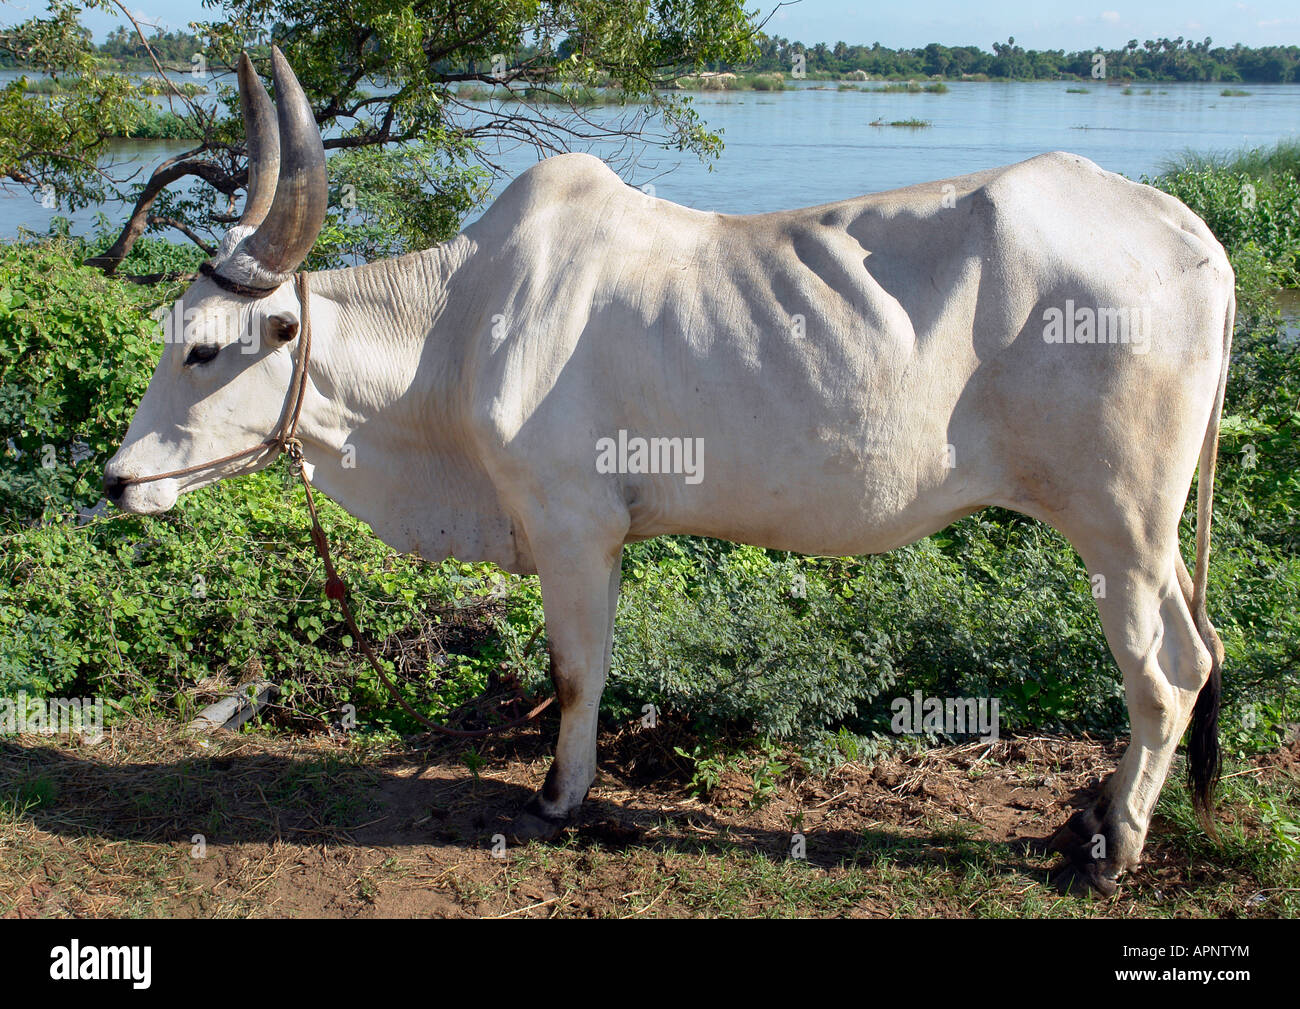 https://c8.alamy.com/comp/APNTYM/indian-bullock-cow-in-rural-village-location-near-trichy-APNTYM.jpg